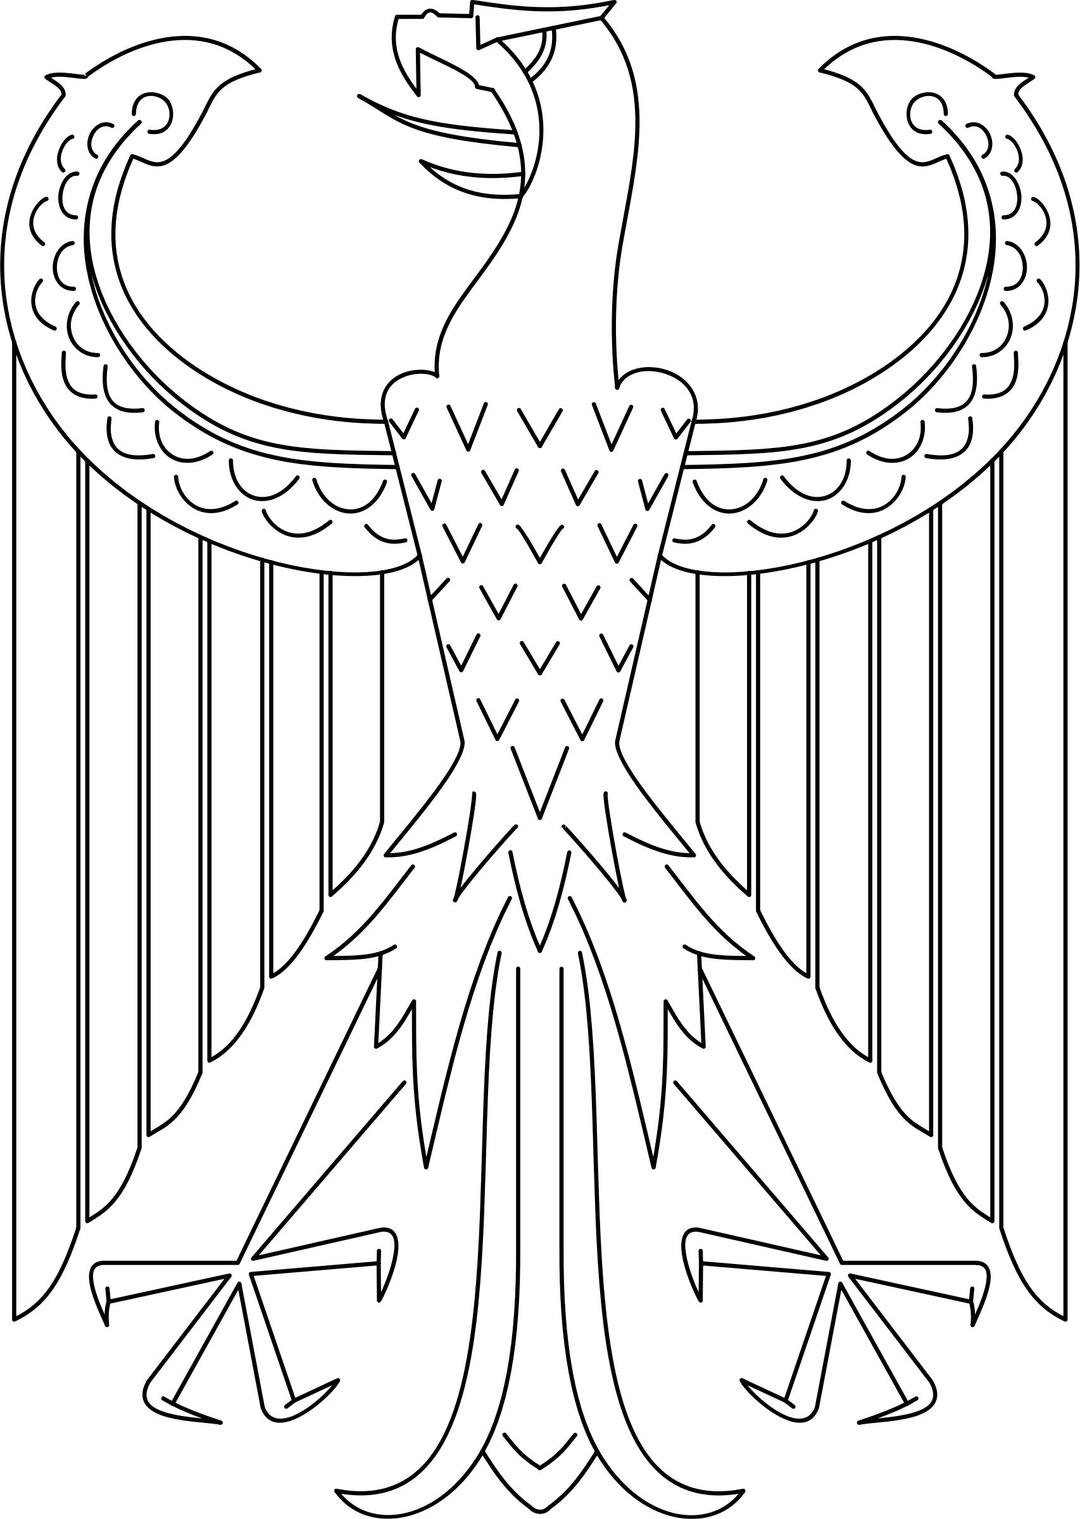 German Imperial Eagle png transparent